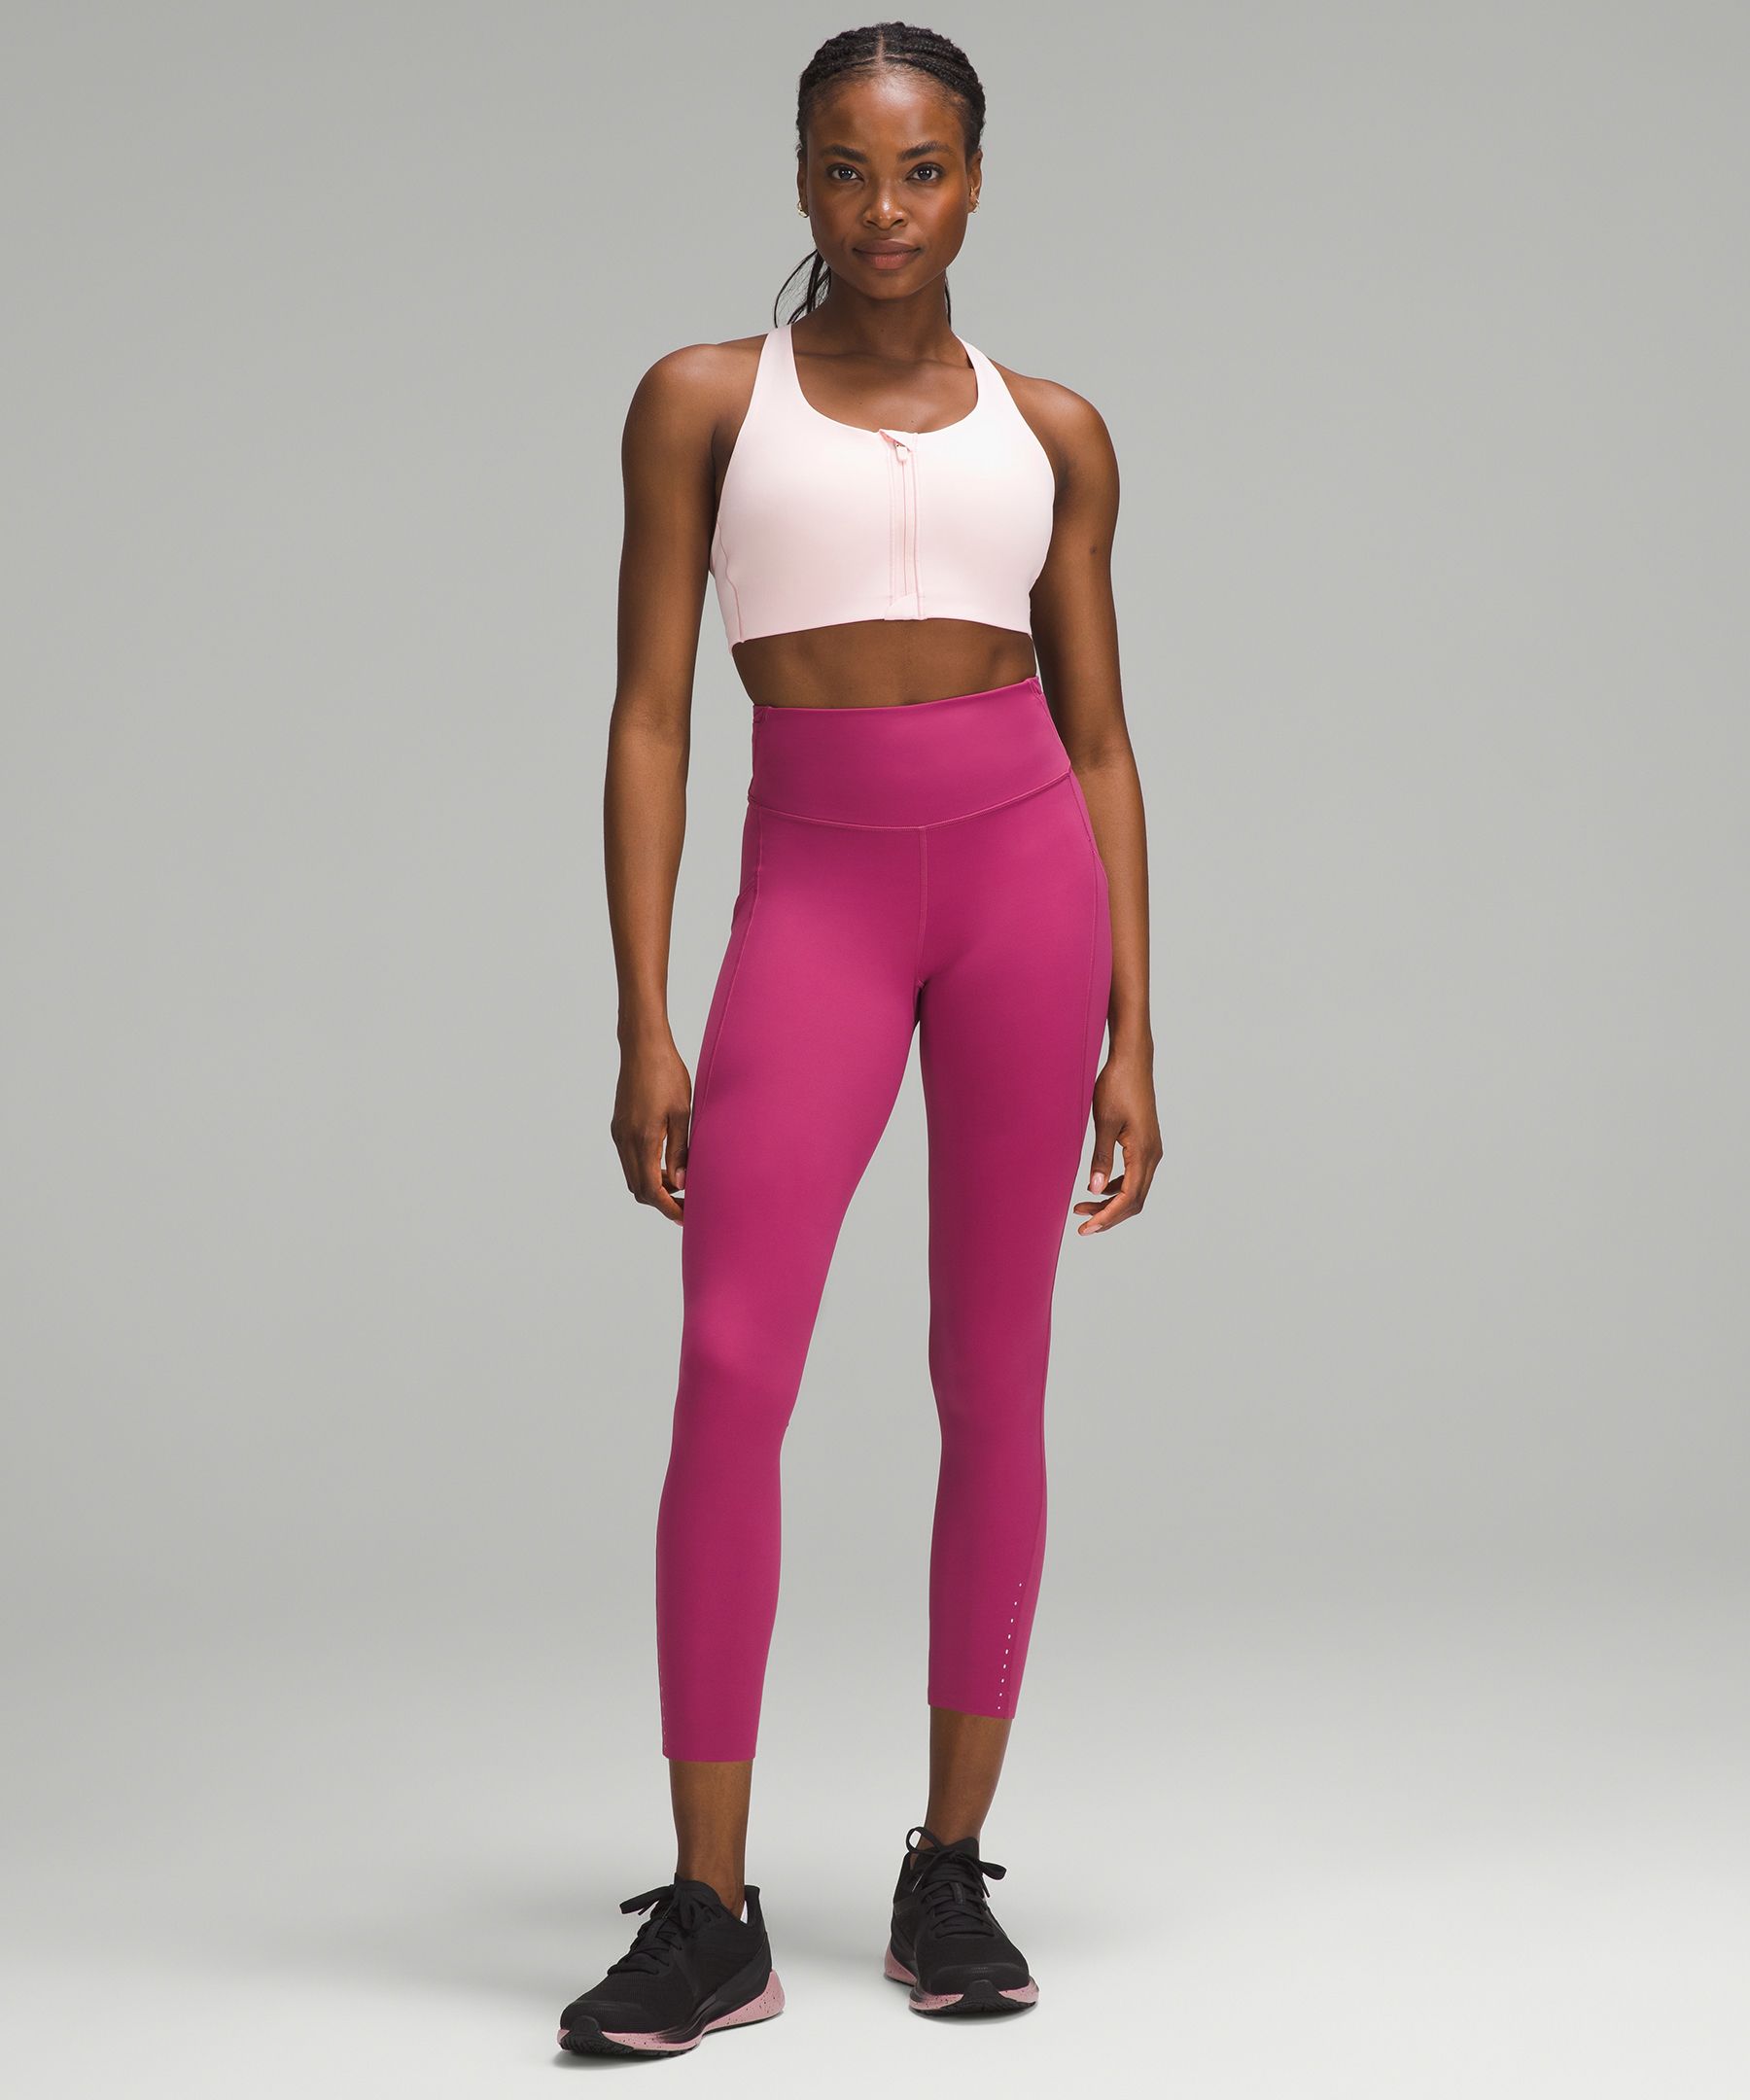 NWT Layer 8 Performance Girls Pink Strappy Sports Bra Size M (10